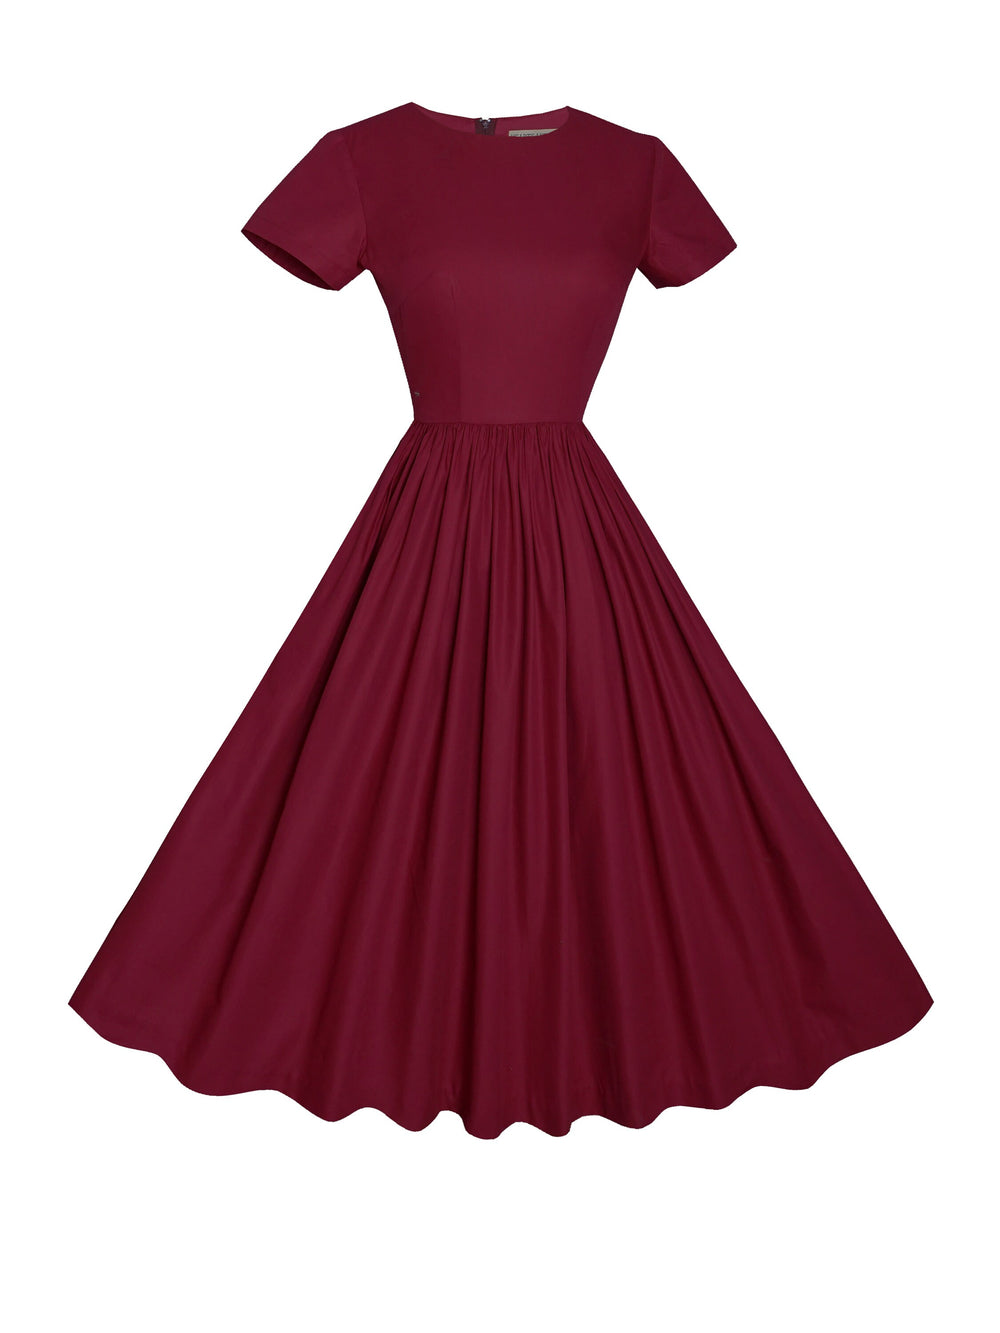 MTO - Dorothy Dress in Burgundy Cotton